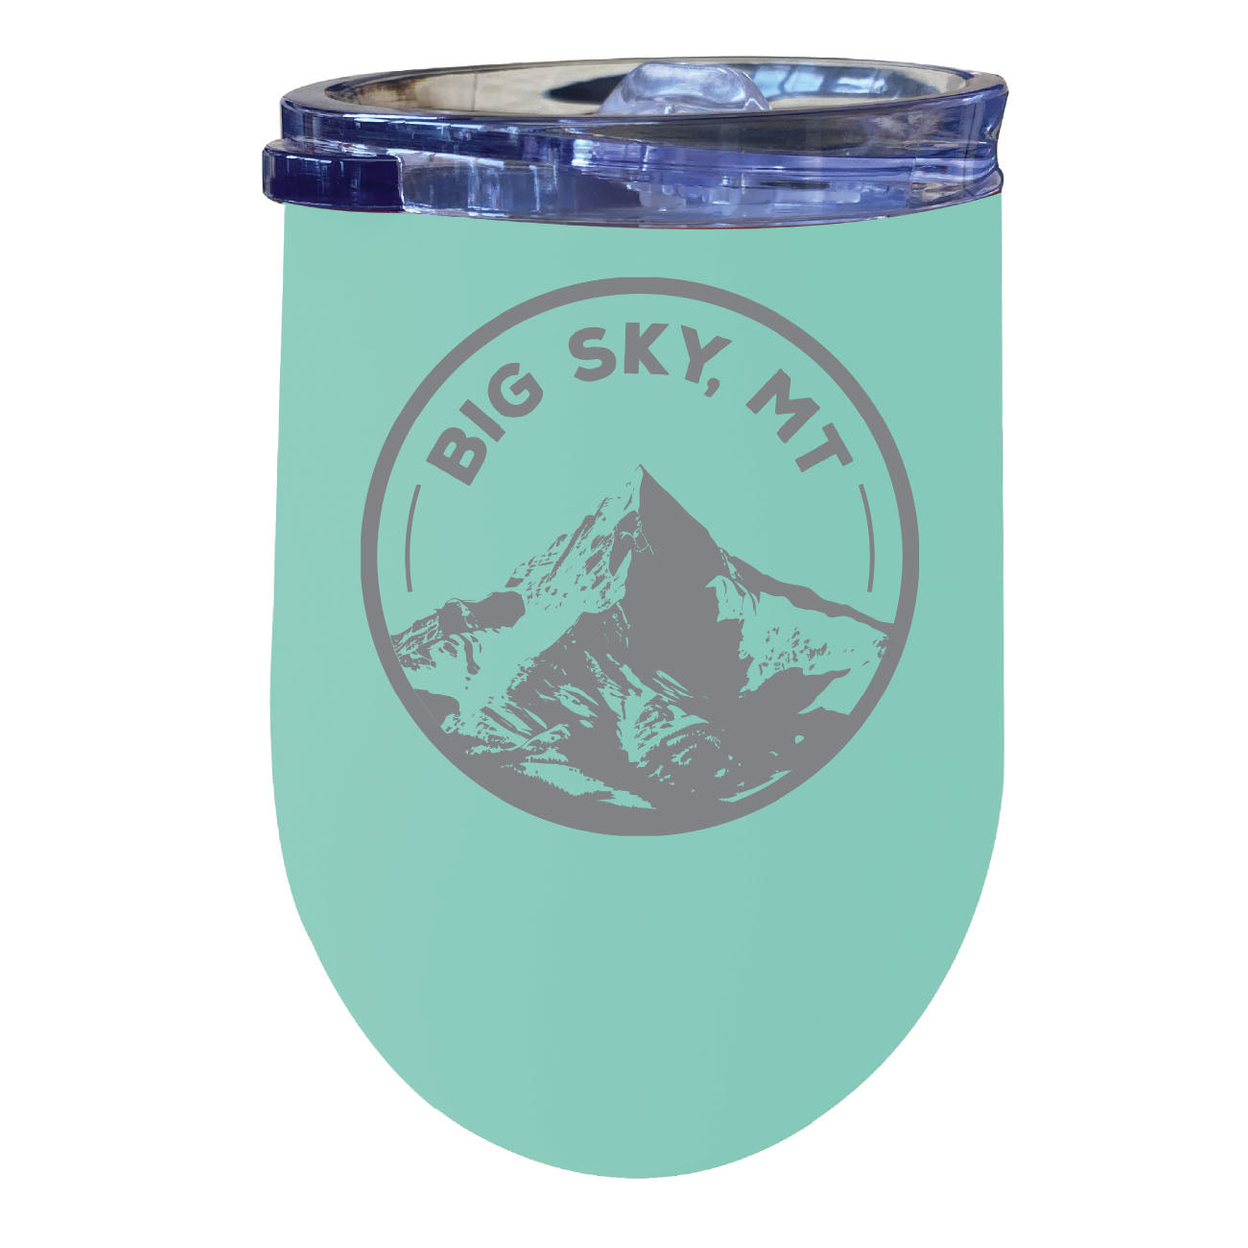 Big Sky Montana Souvenir 12 Oz Engraved Insulated Wine Stainless Steel Tumbler - Seafoam,,Single Unit